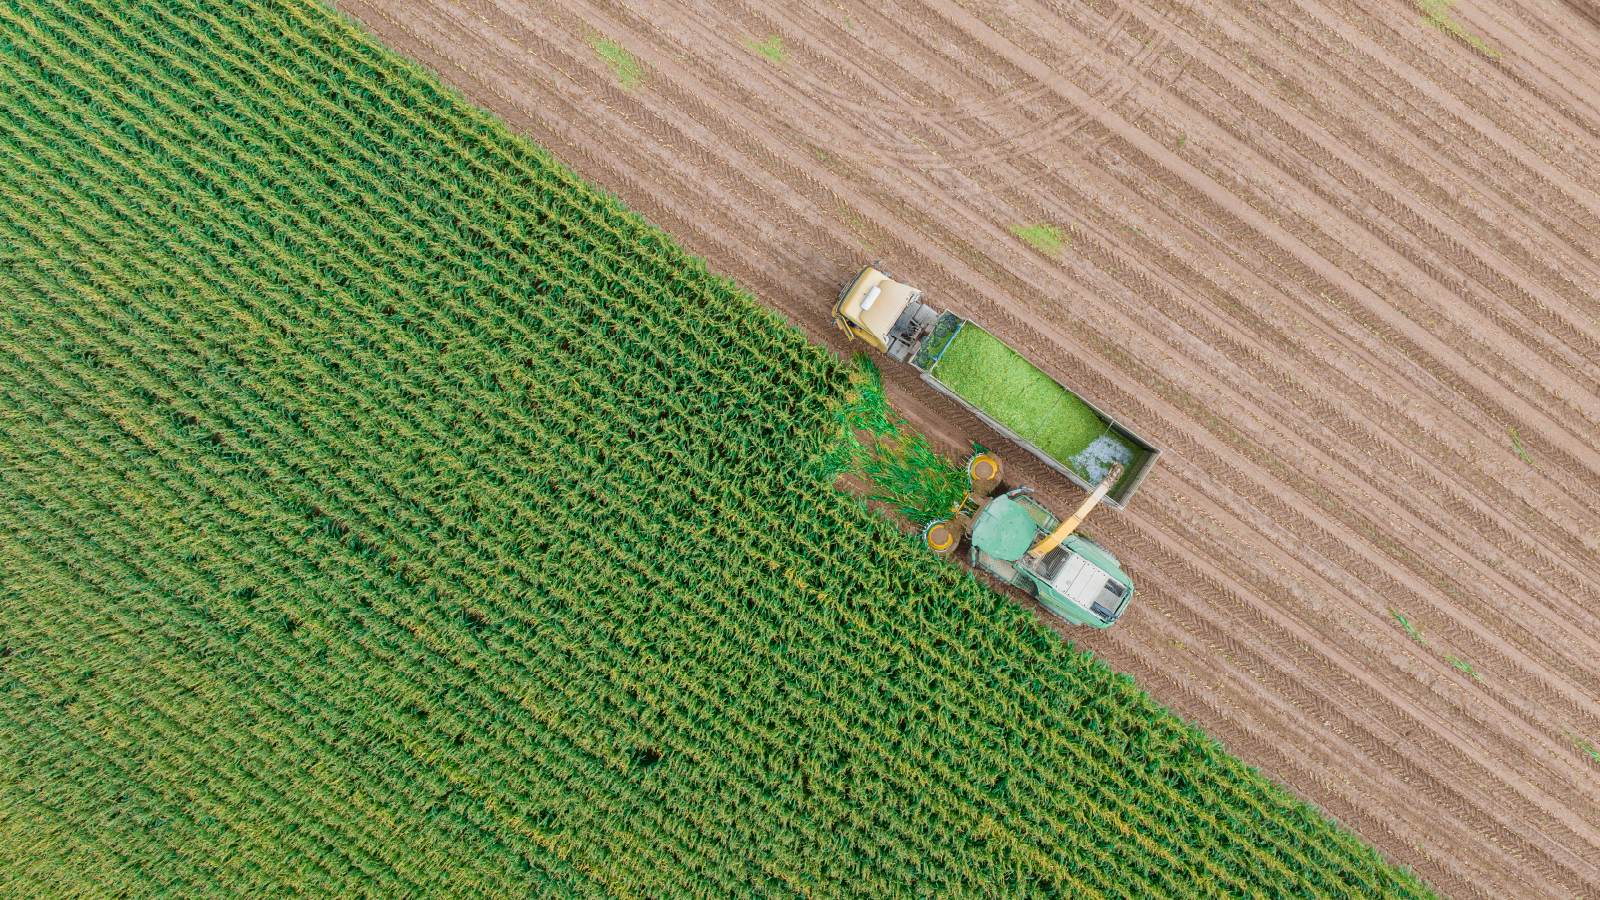 Aerial view of farm equipment harvesting a crop